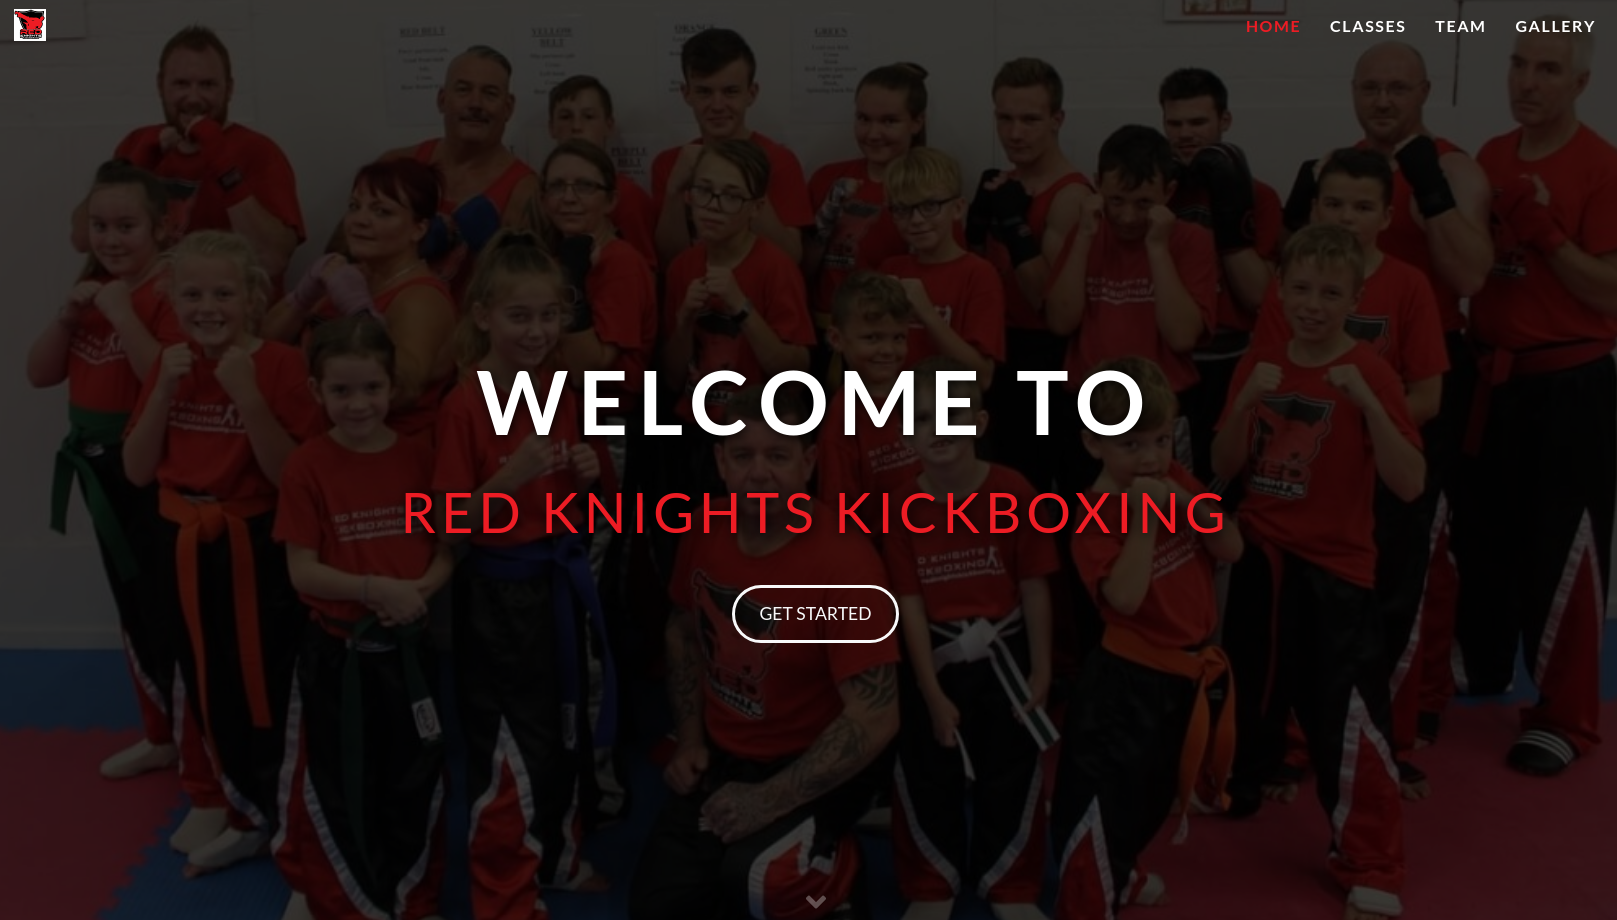 Red knights Kickboxing